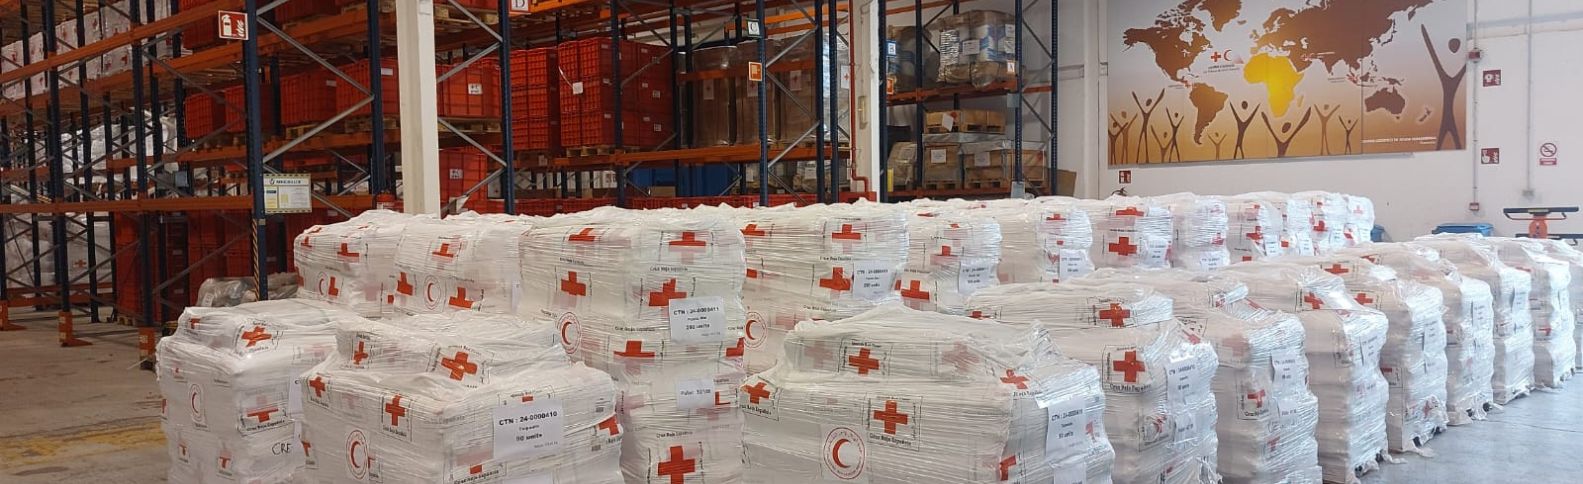 Cruz Roja Española se prepara para enviar 53 toneladas de ayuda humanitaria a Gaza